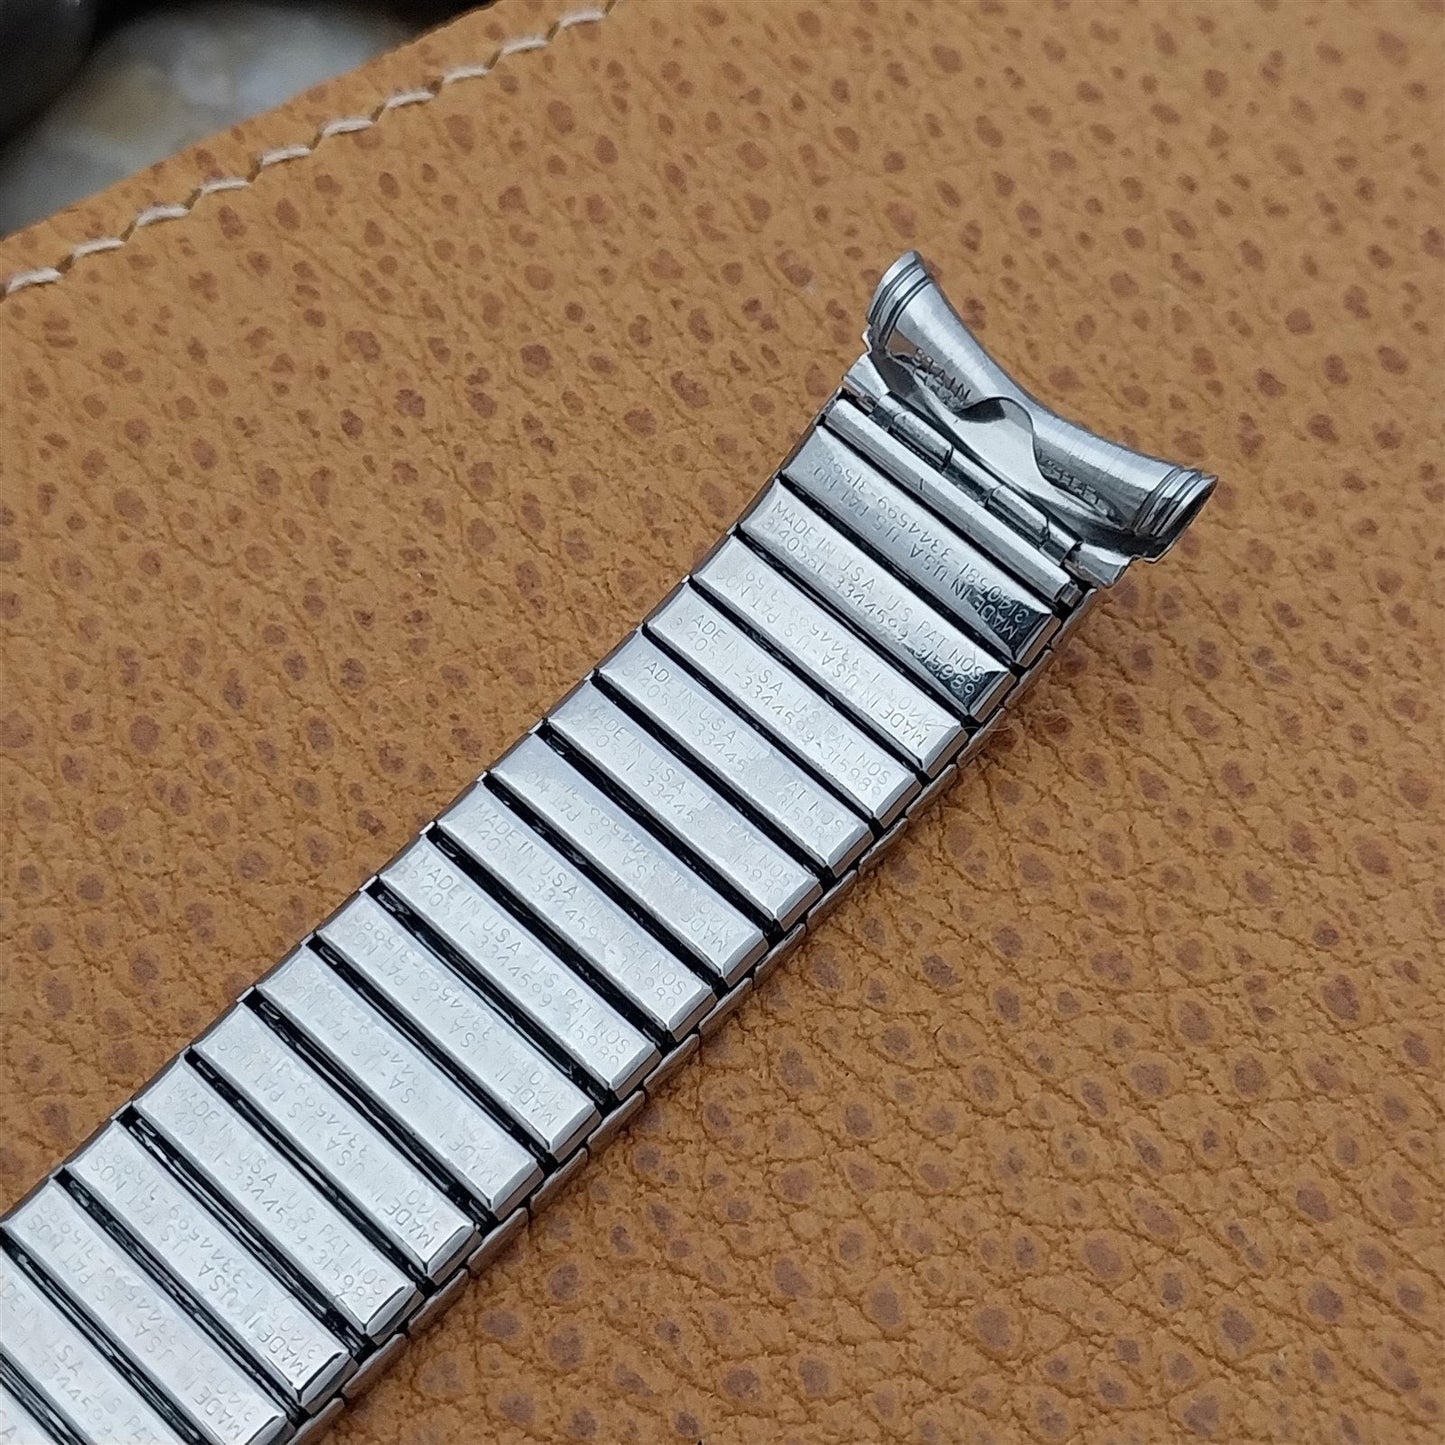 19mm 18mm 17mm Kreisler Stainless Steel Long DuraFlex 1960s Vintage Watch Band